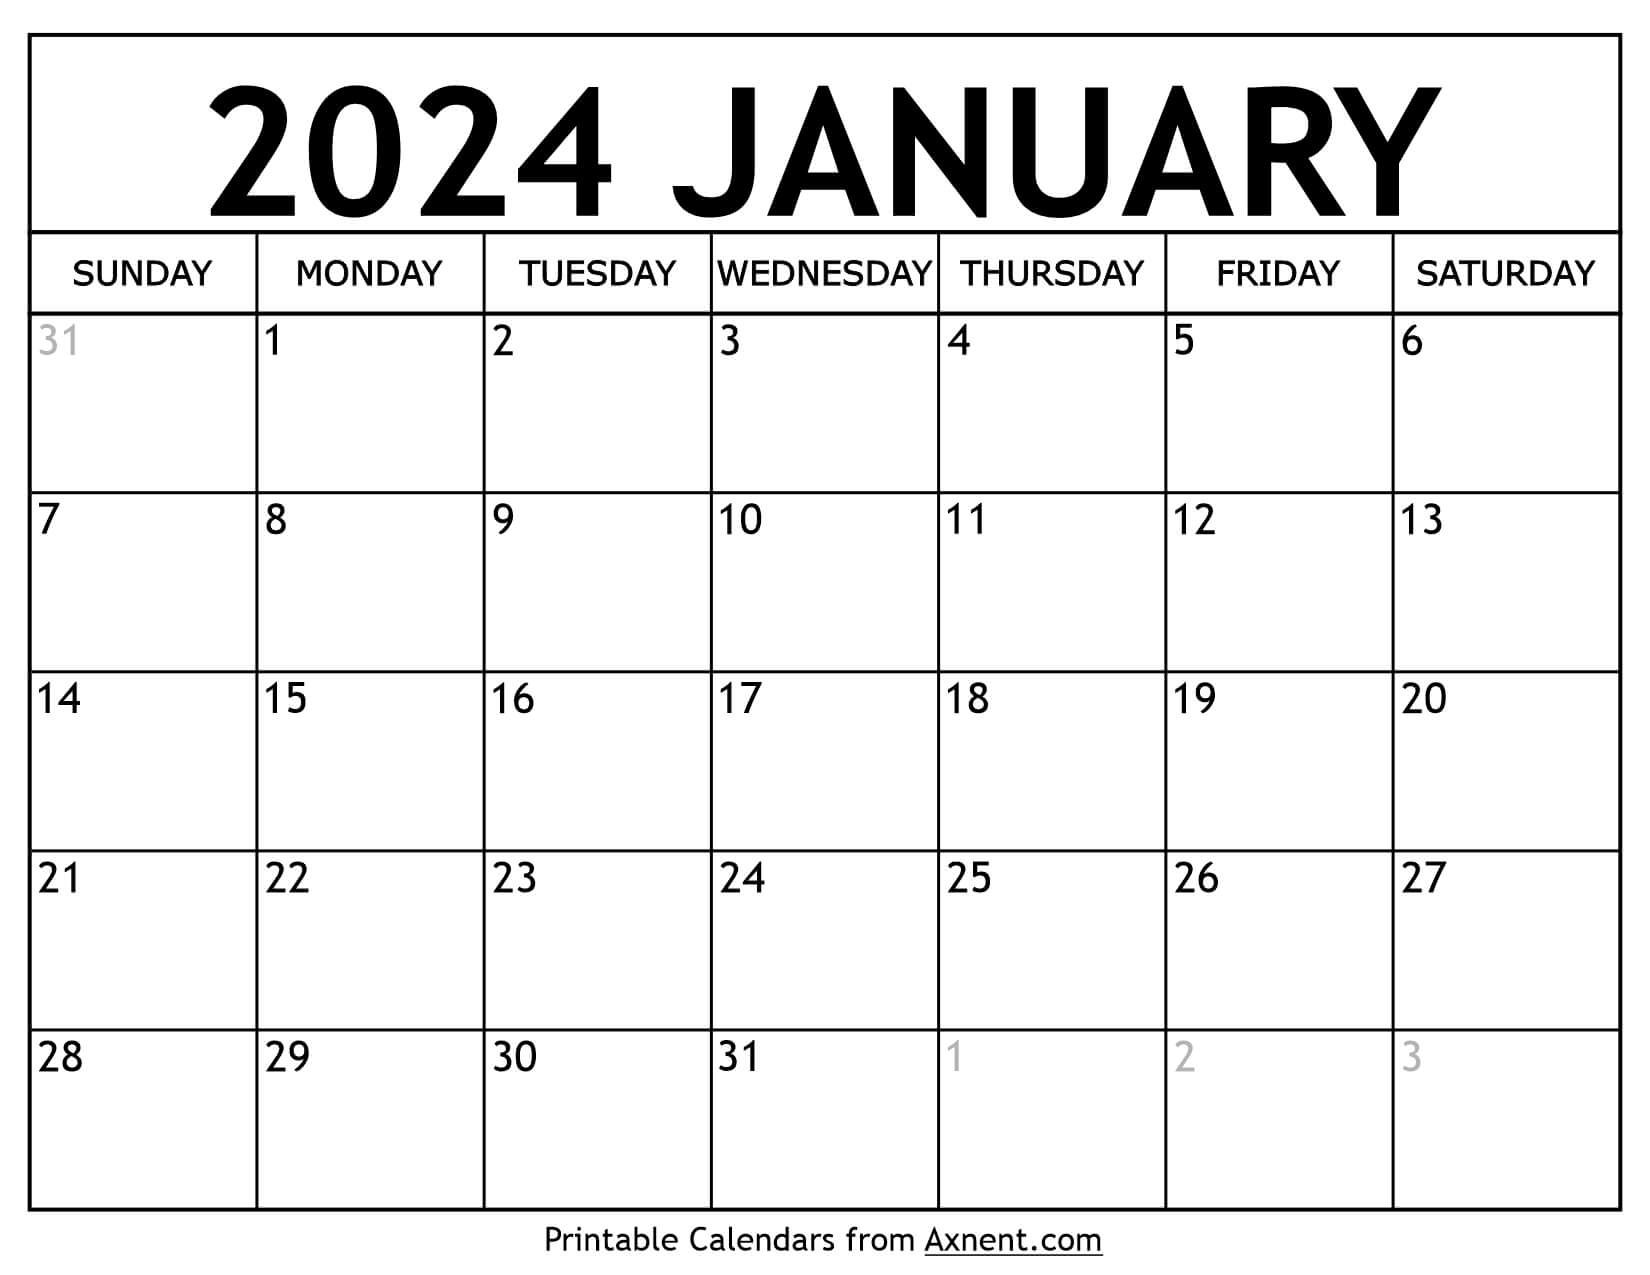 Printable January 2024 Calendar Template - Print Now for Printable January 2024 Calendar Free